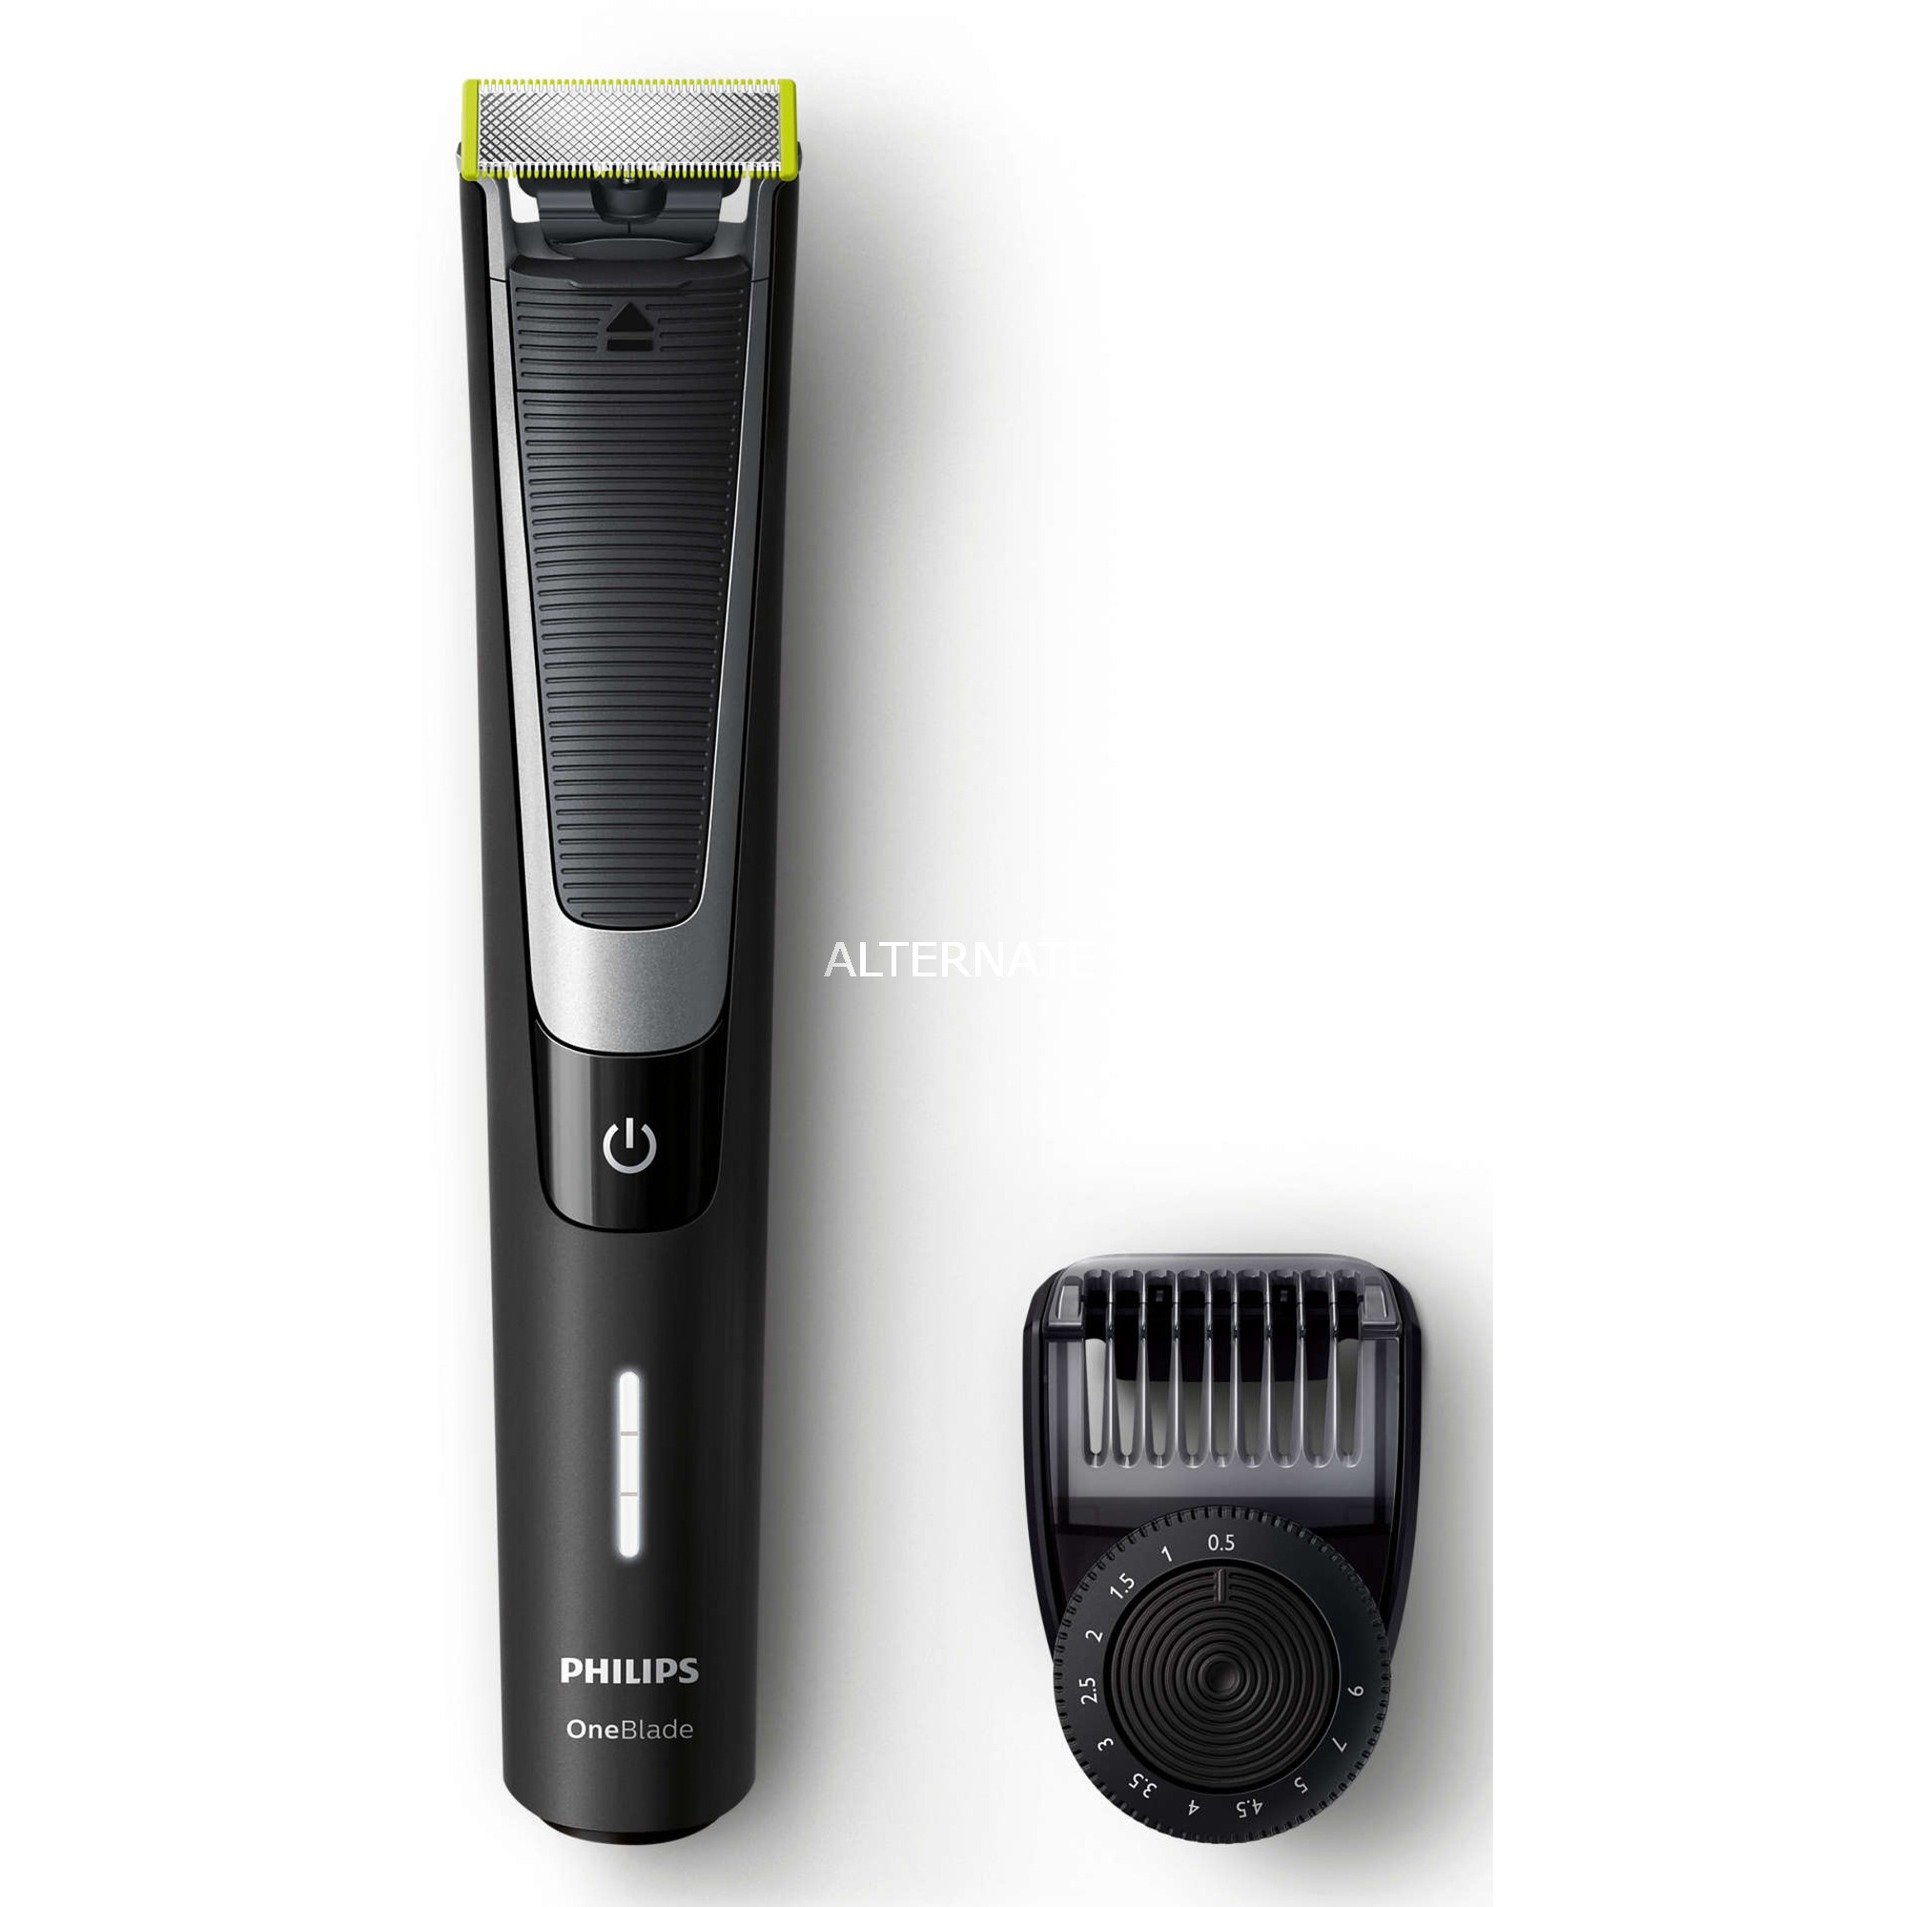 OneBlade Pro QP6510/20, Beard trimmer